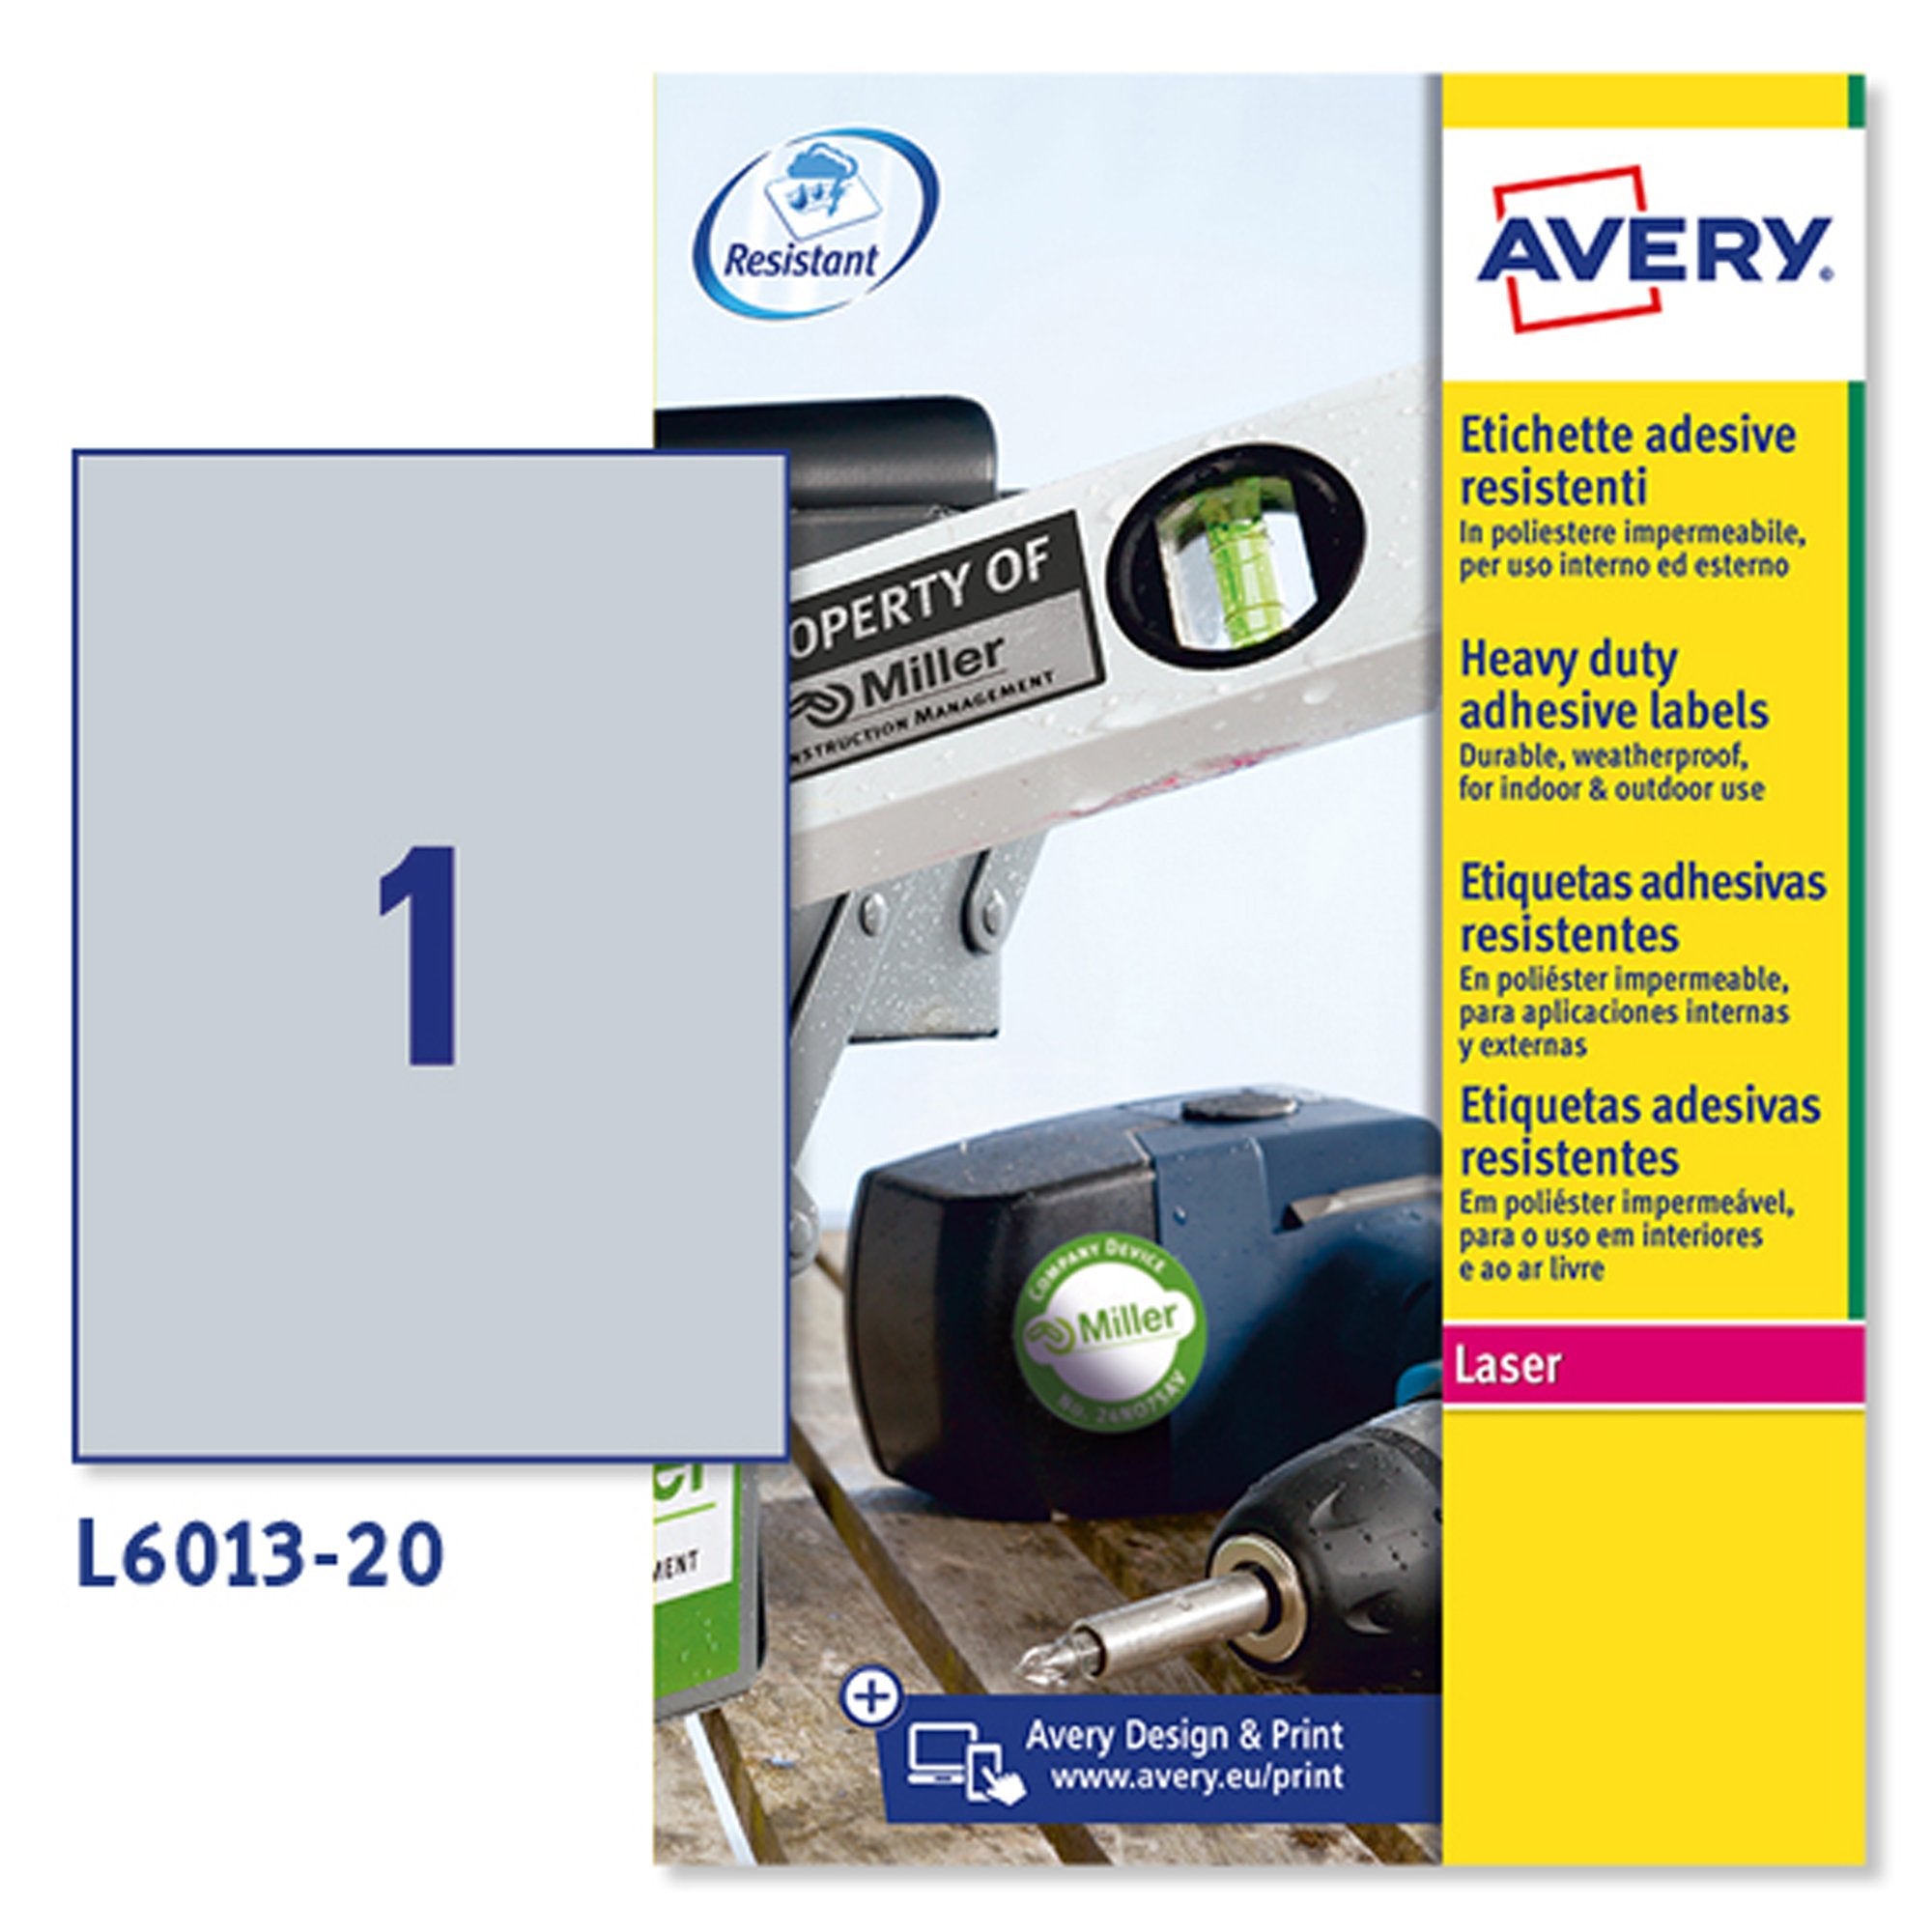 avery-poliestere-adesivo-l6013-argento-20fg-a4-210x297mm-1et-fg-laser